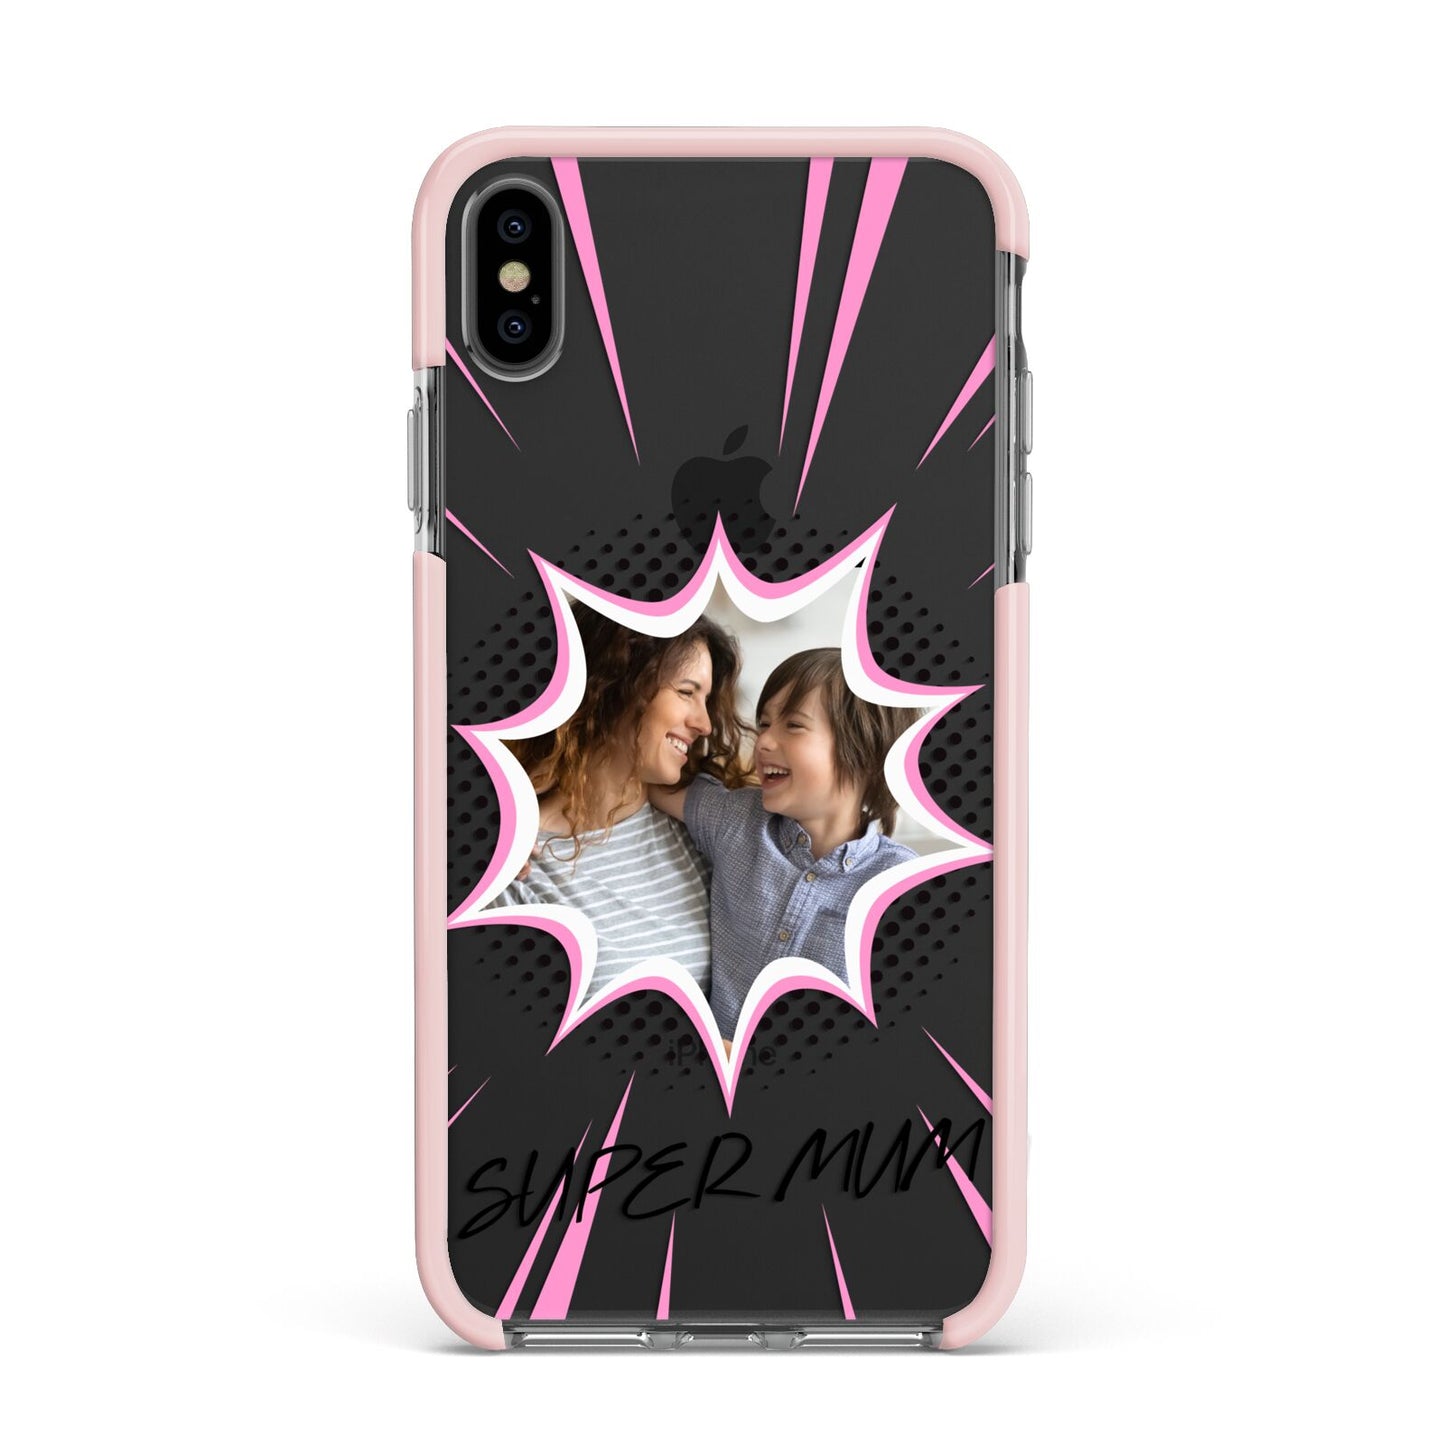 Super Mum Photo Apple iPhone Xs Max Impact Case Pink Edge on Black Phone